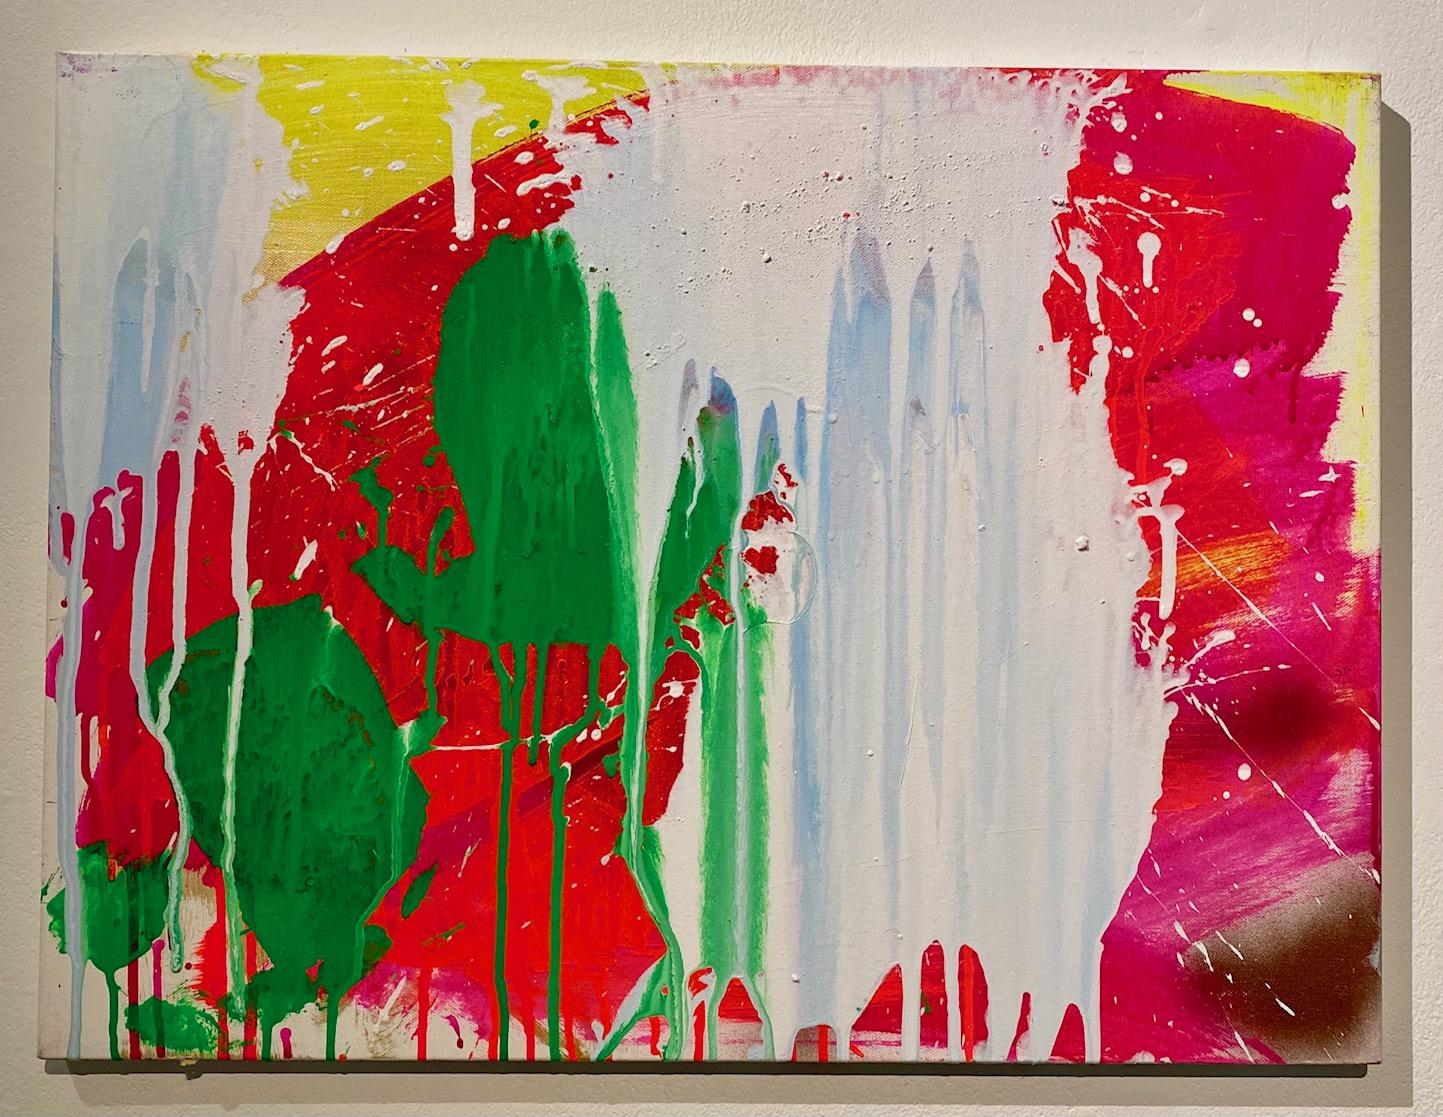 Abstract Painting Ushio Shinohara - Peinture à l'acrylique sur toile - Peinture abstraite de boxe White, Red and Green